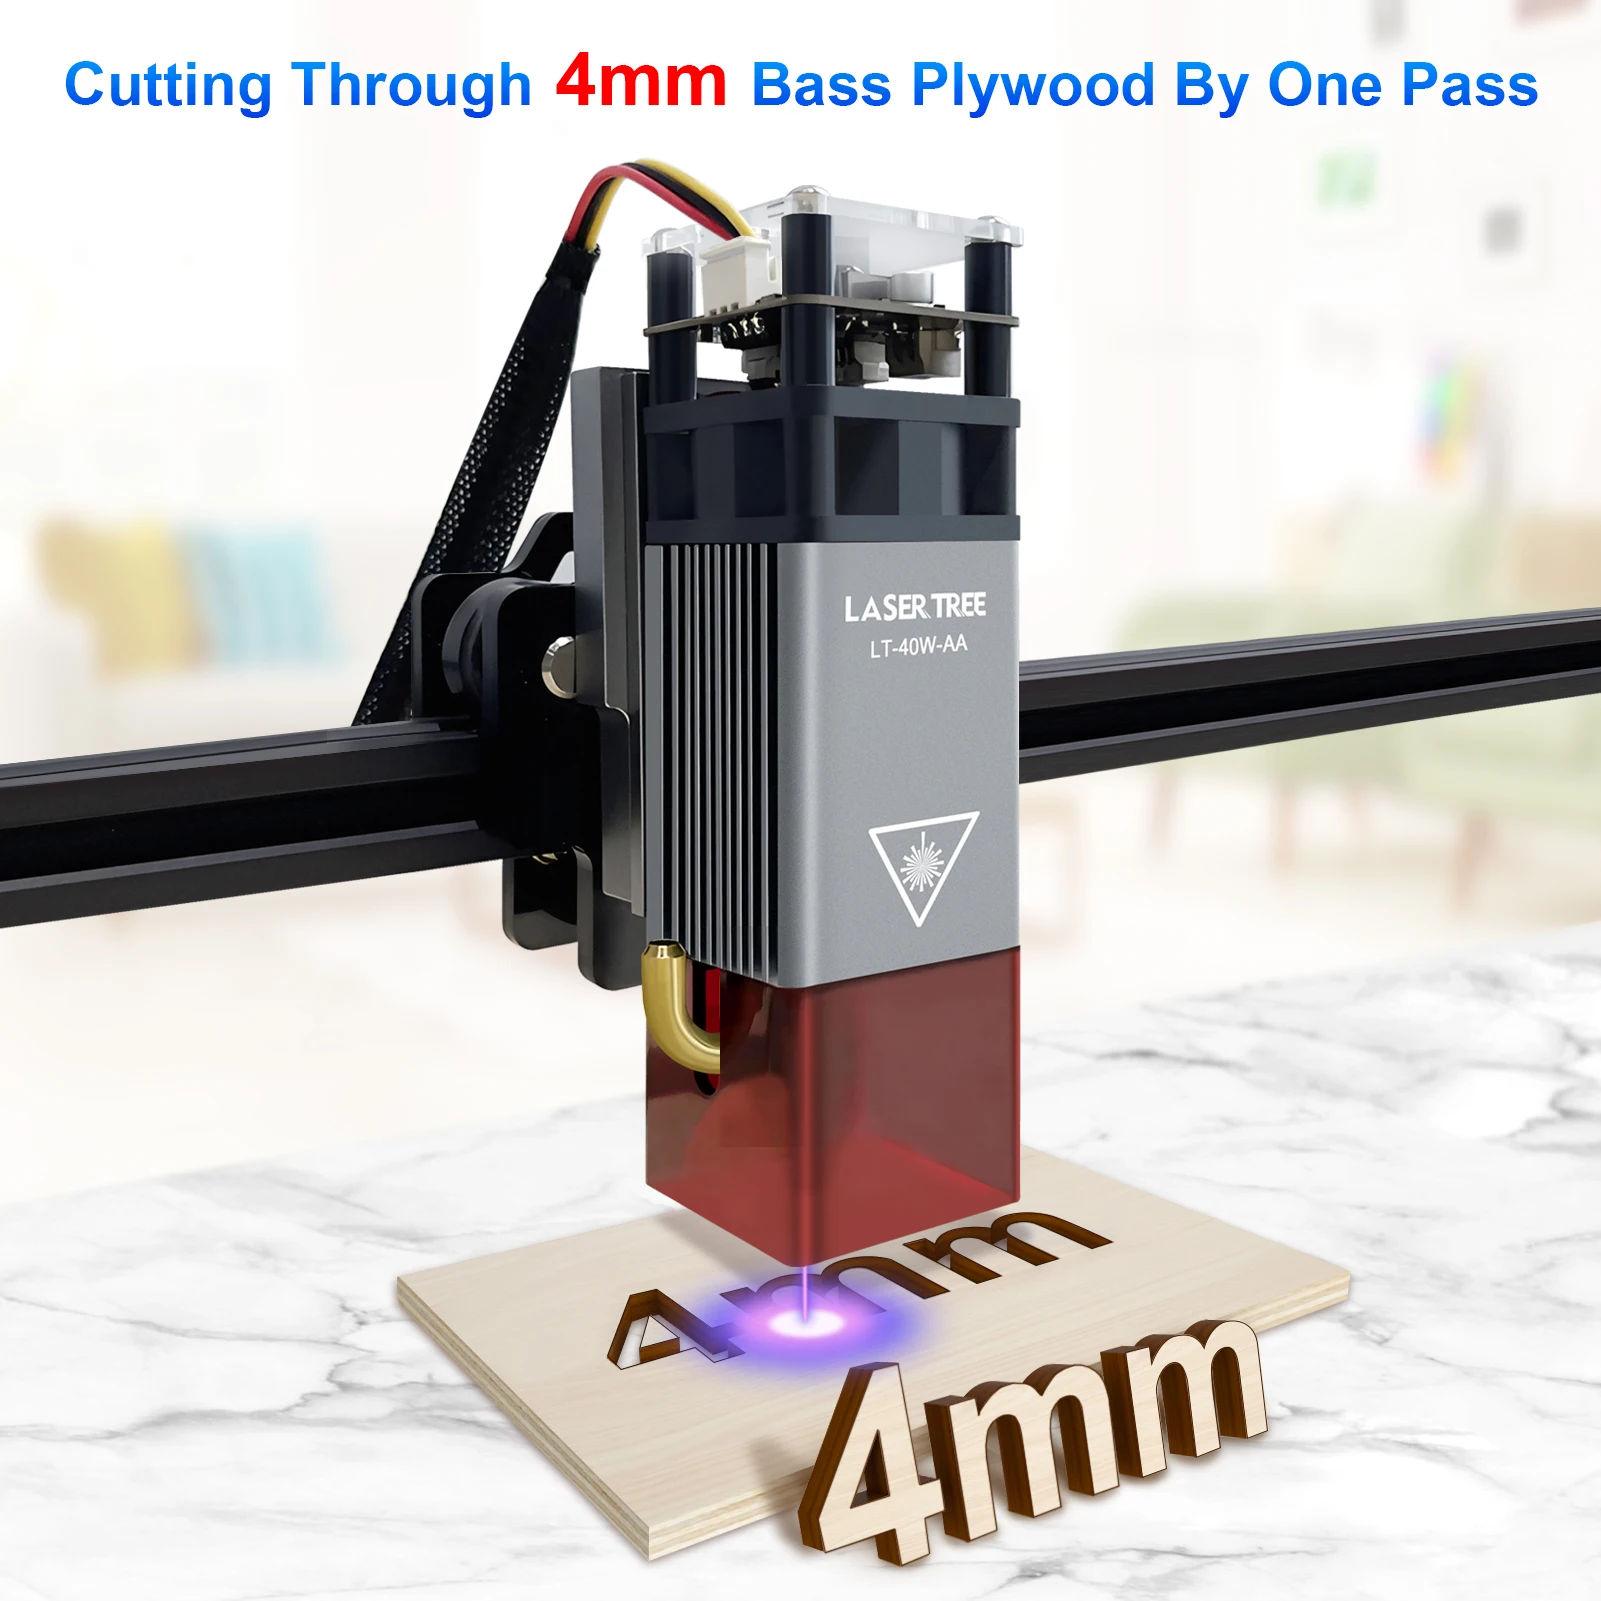 LASER TREE 40W Air Assist Metal Nozzle Laser Head 450nm Blue Light Module for CNC Laser Engraver Wood Cutting DIY Tools enlarge